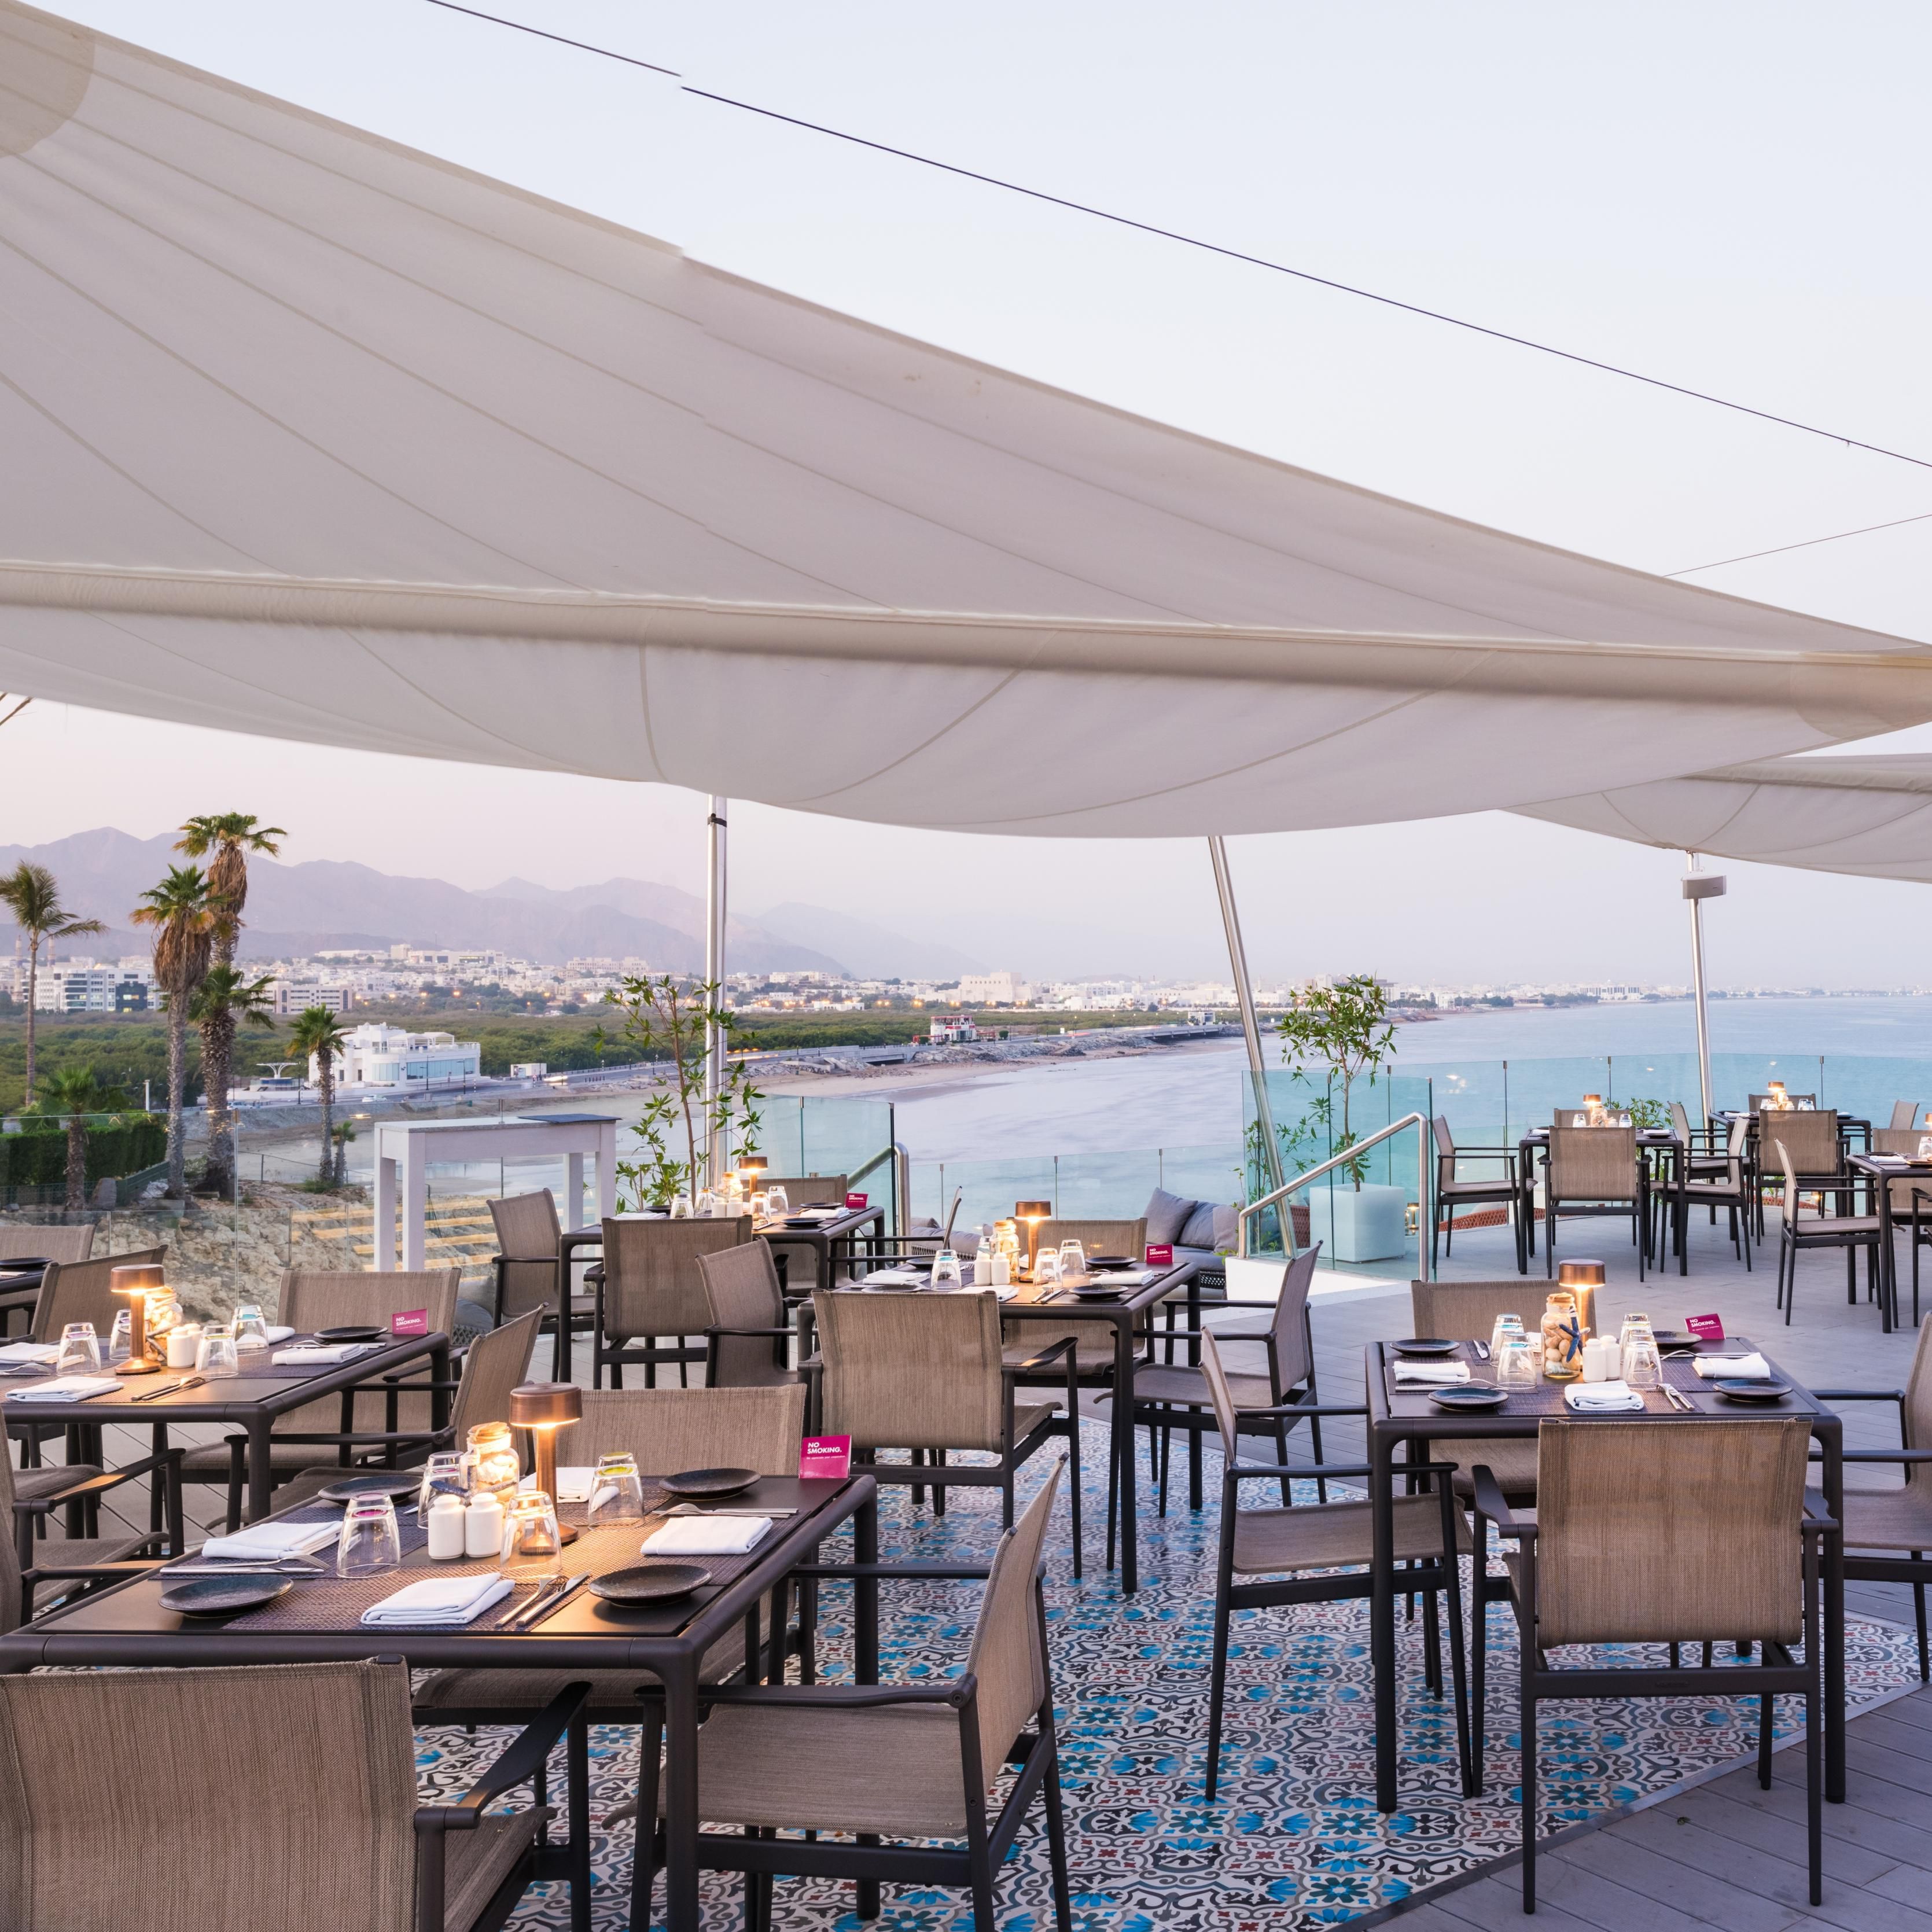 The Edge Restaurant Terrace with striking panoramic views